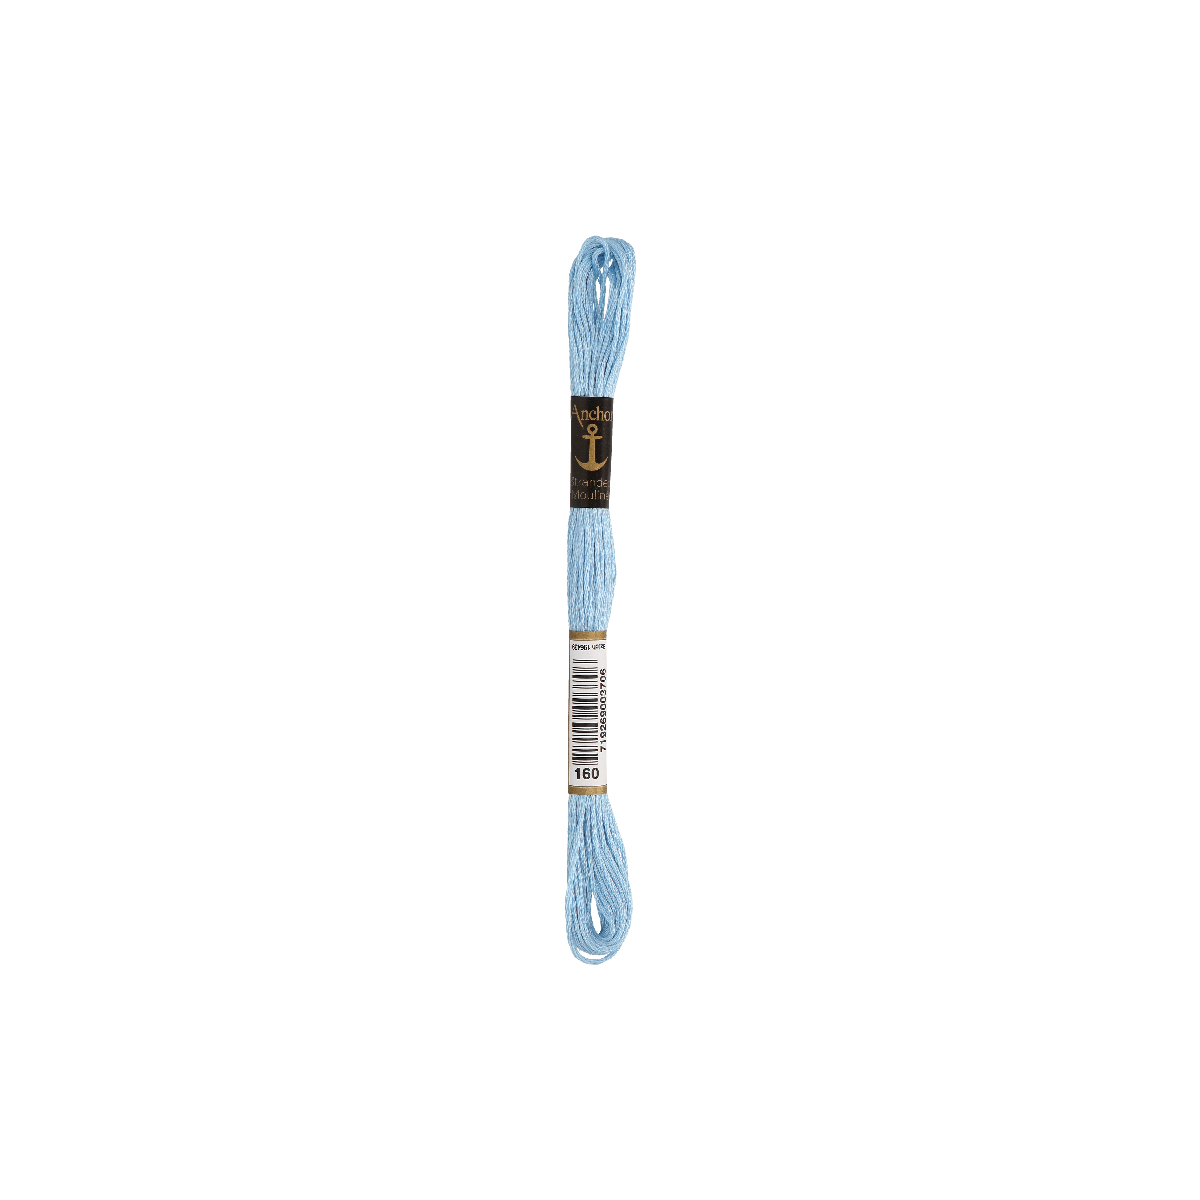 Anchor Sticktwist 8m, blauw, katoen, kleur 160, 6-draads